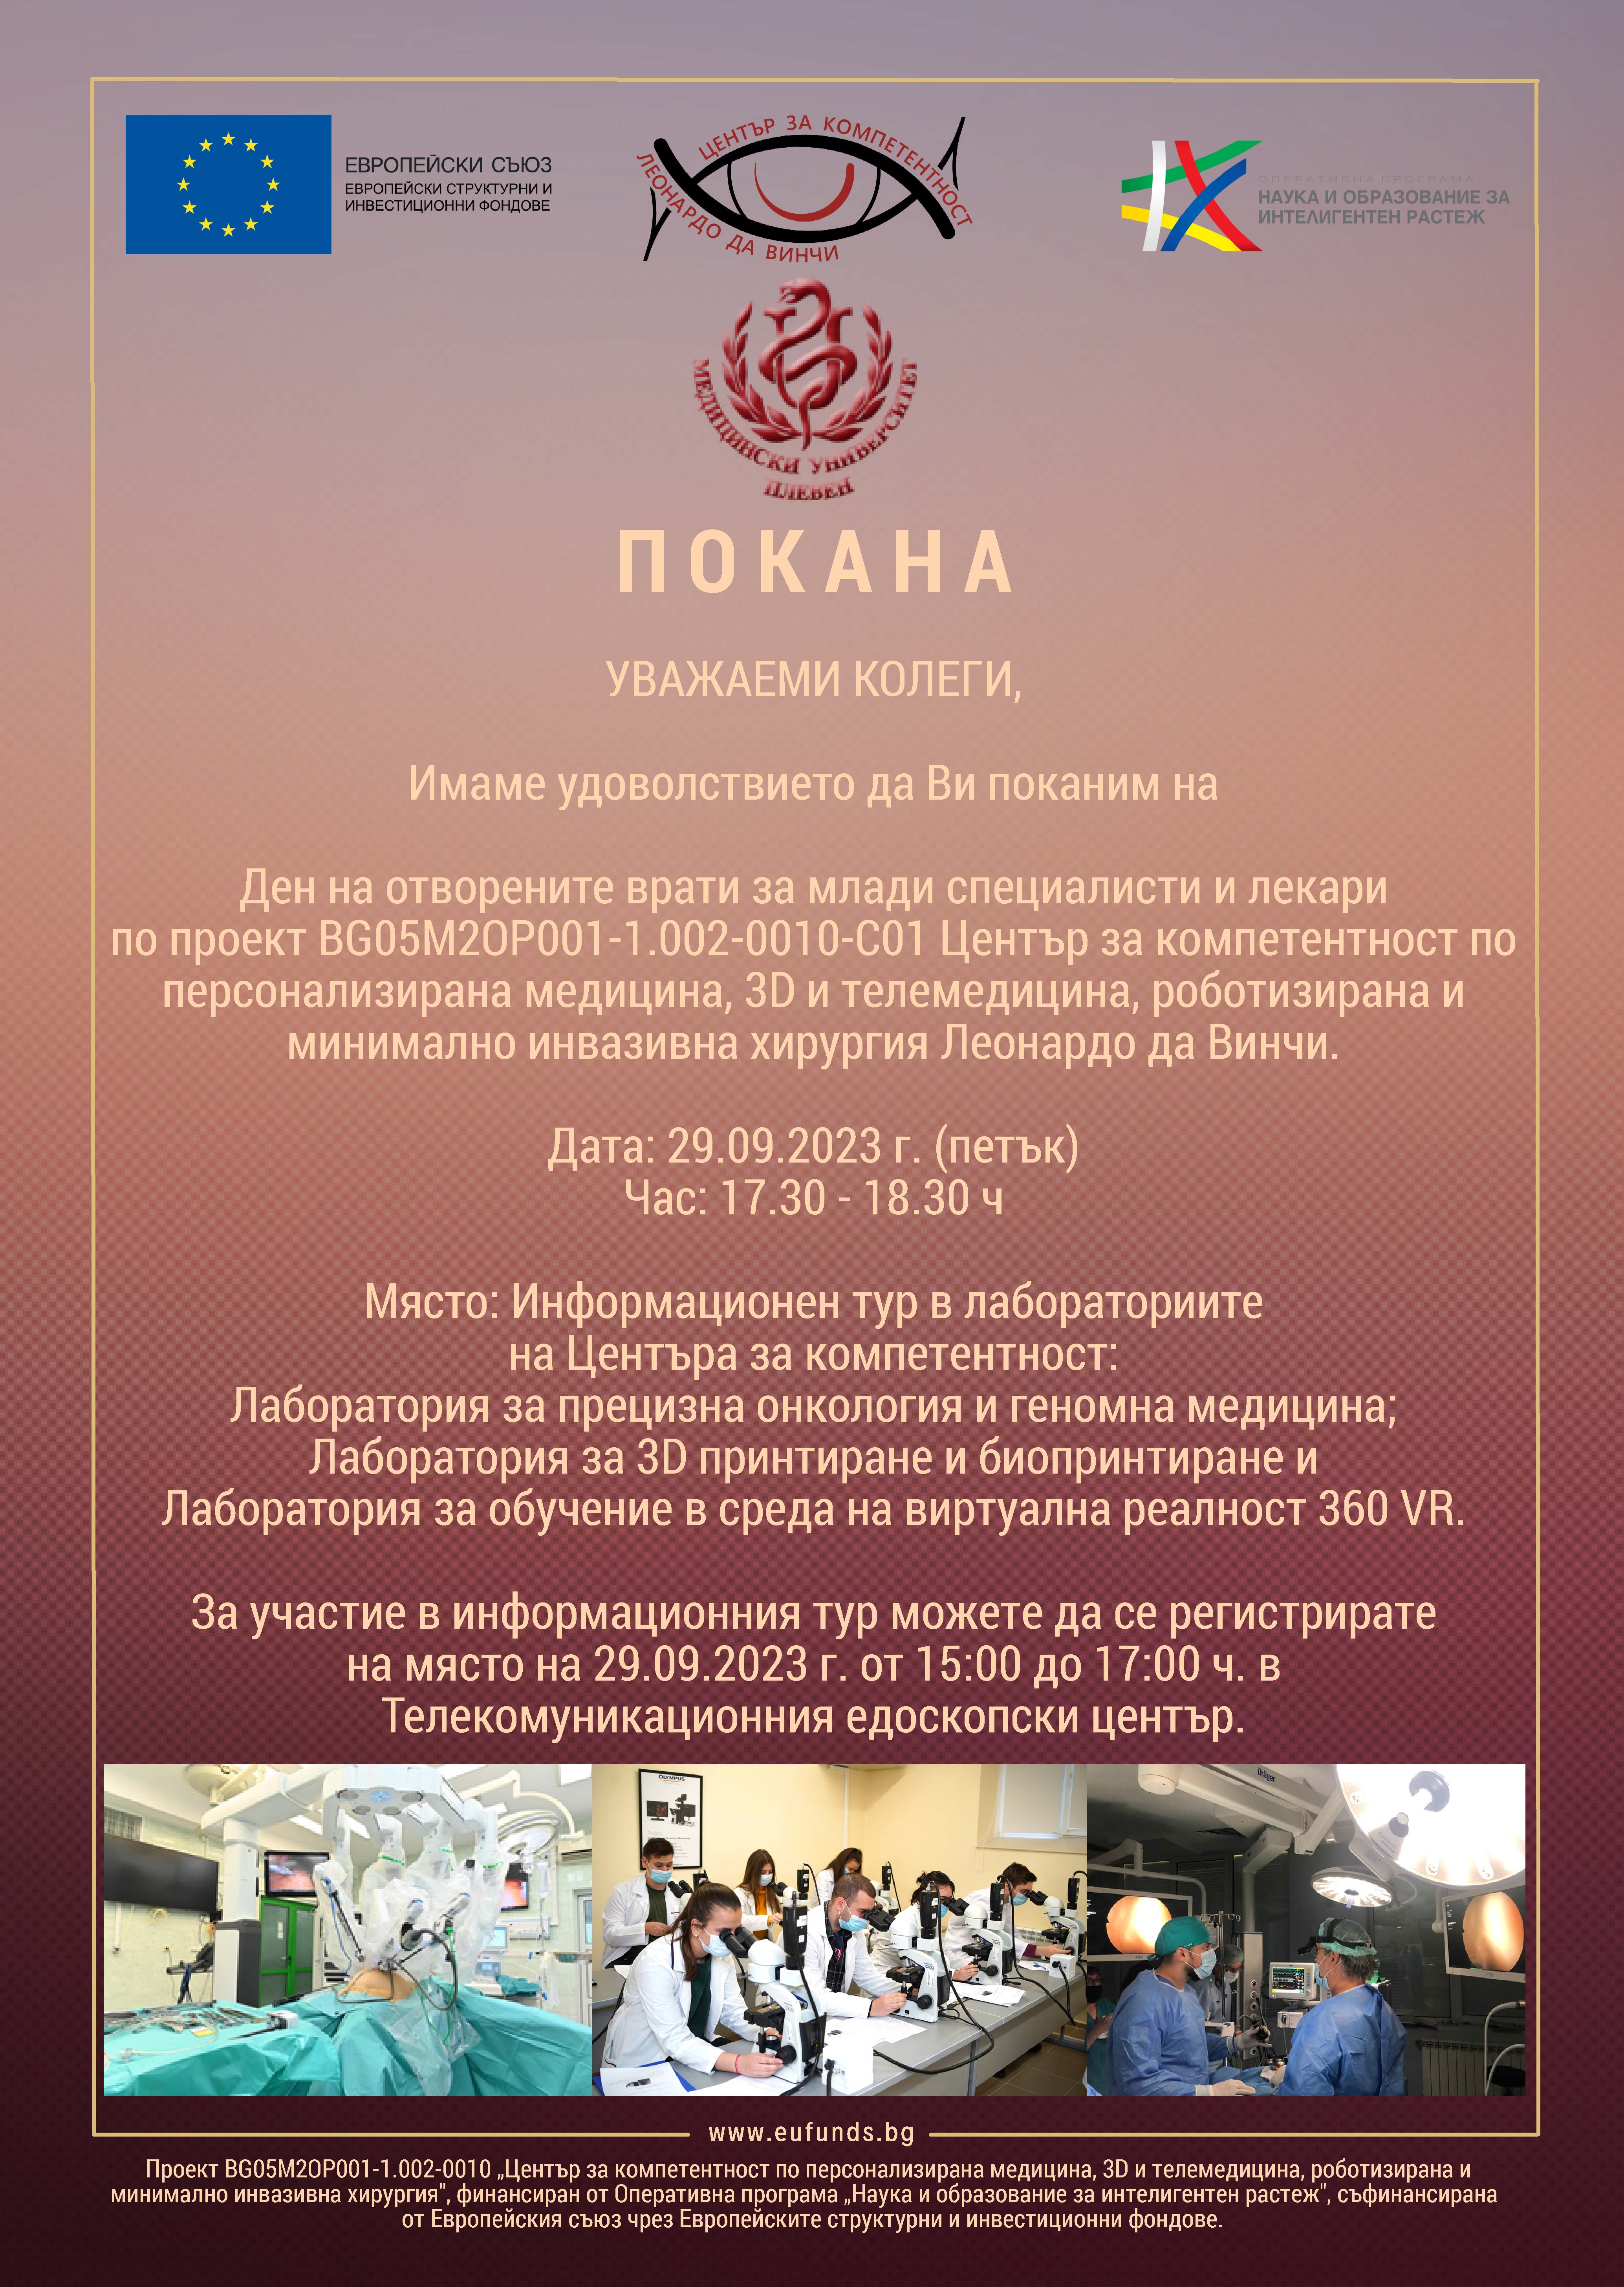 Invitation Event